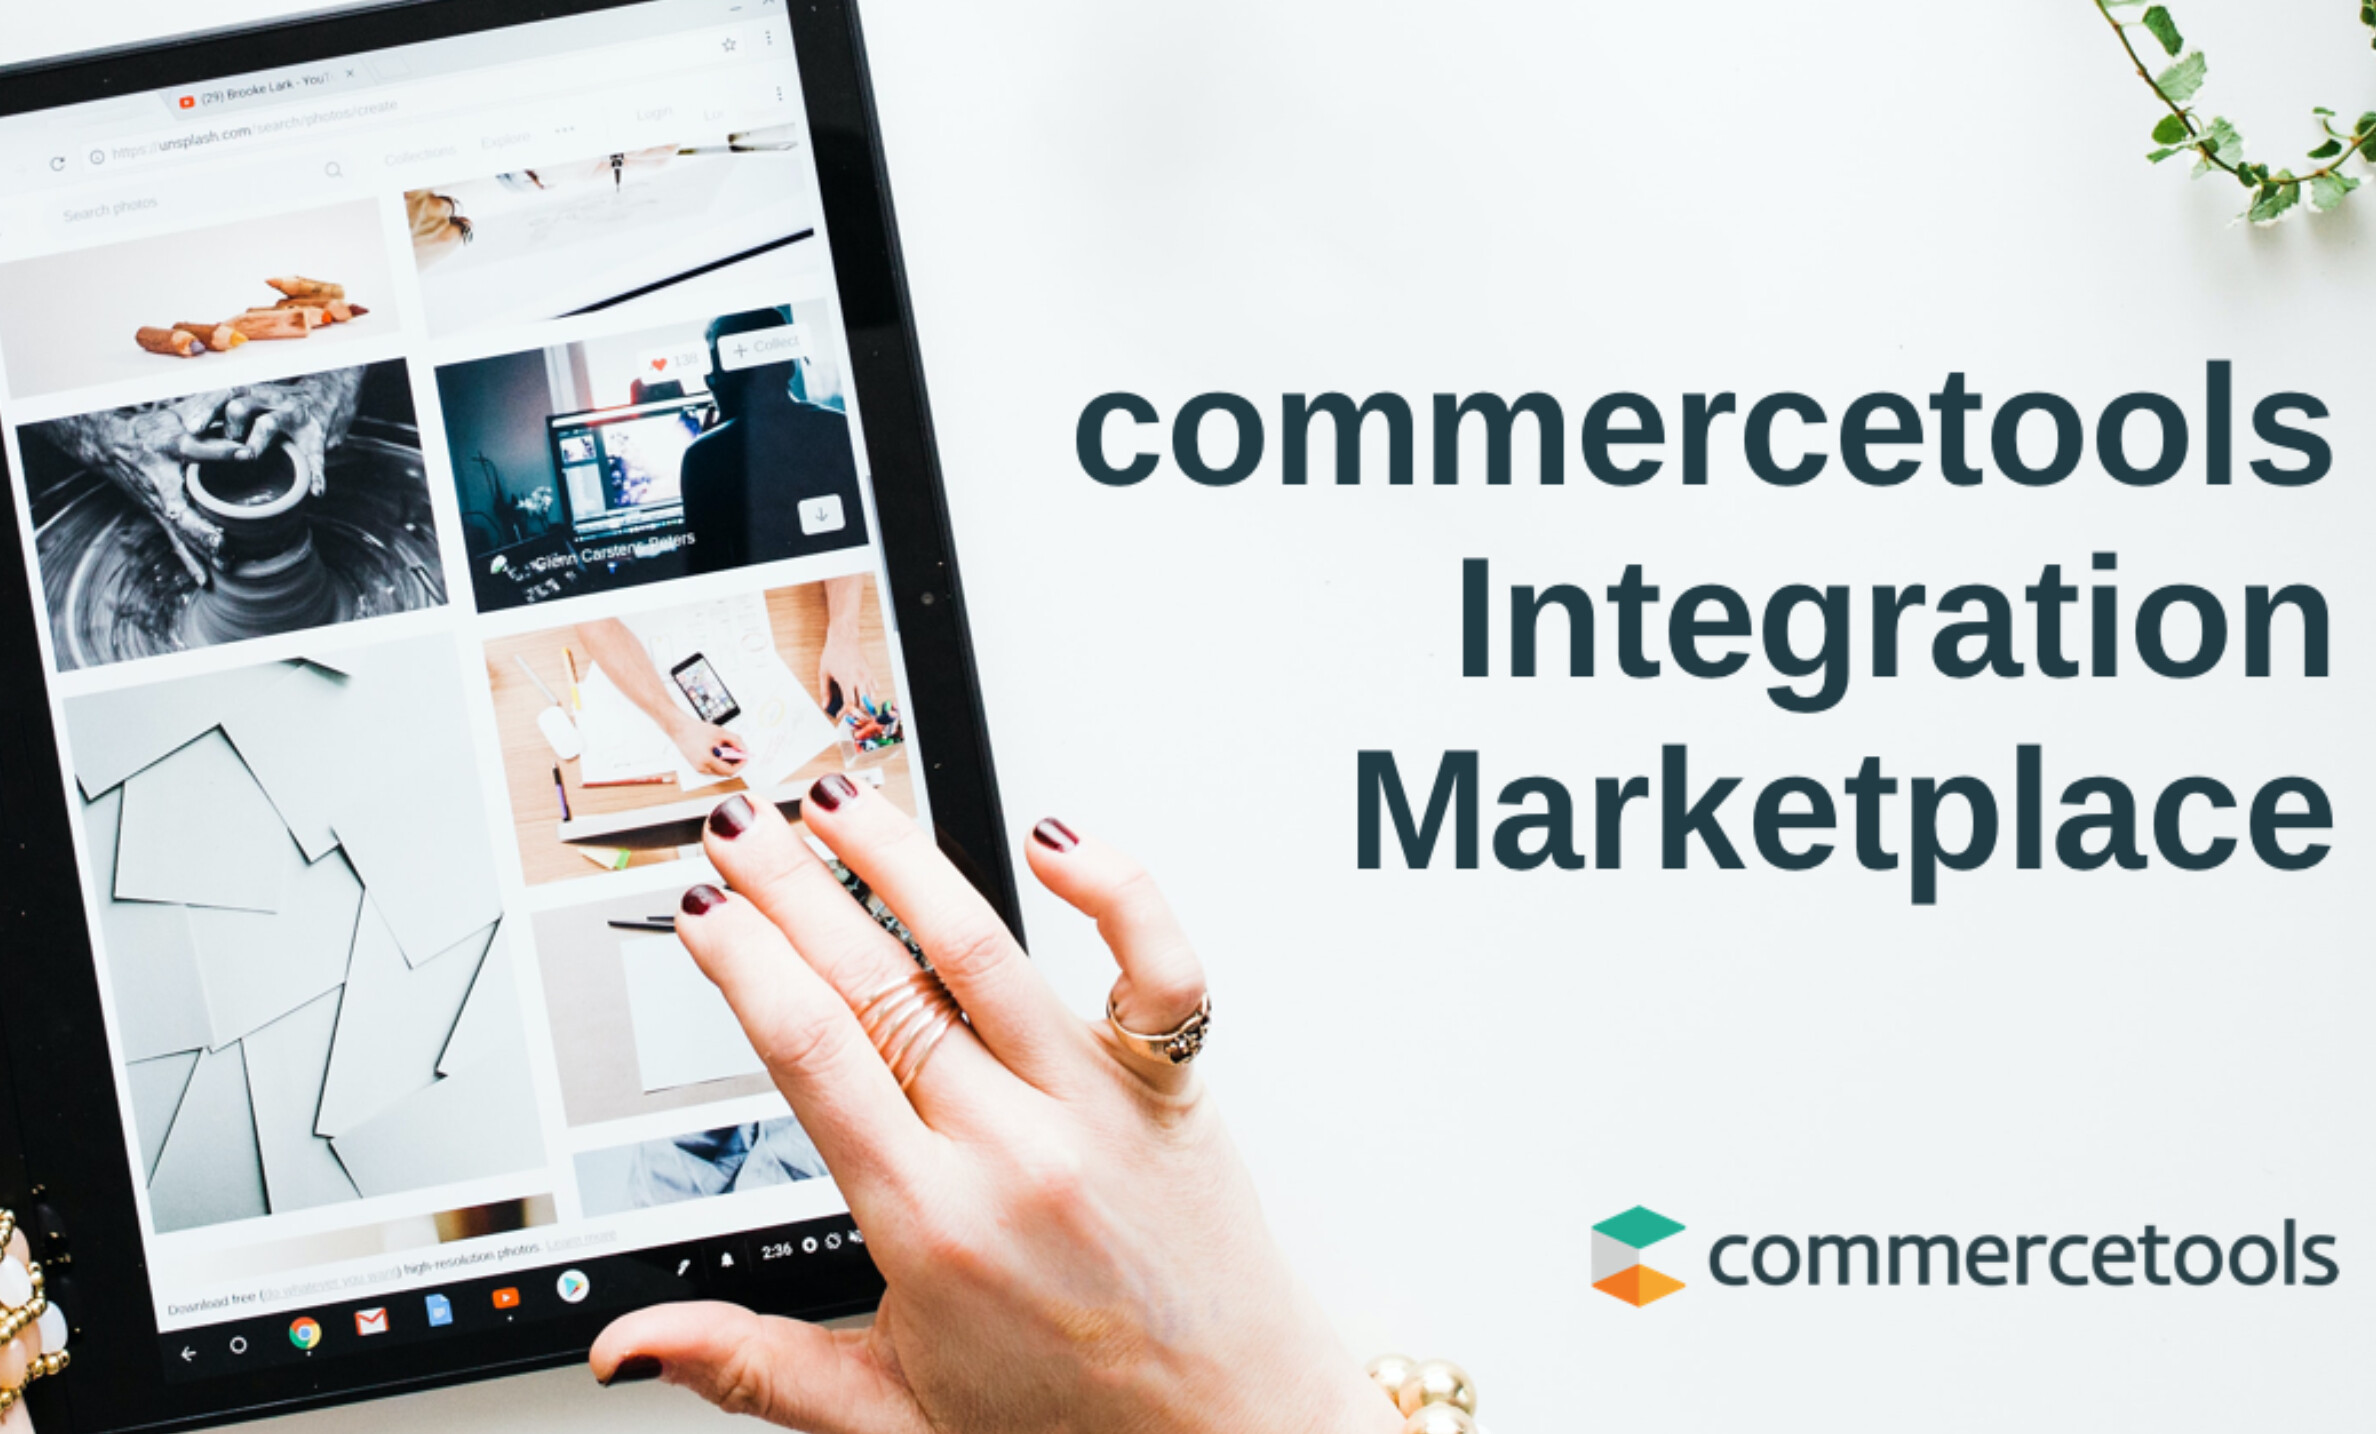 commercetools opens Integration Marketplace